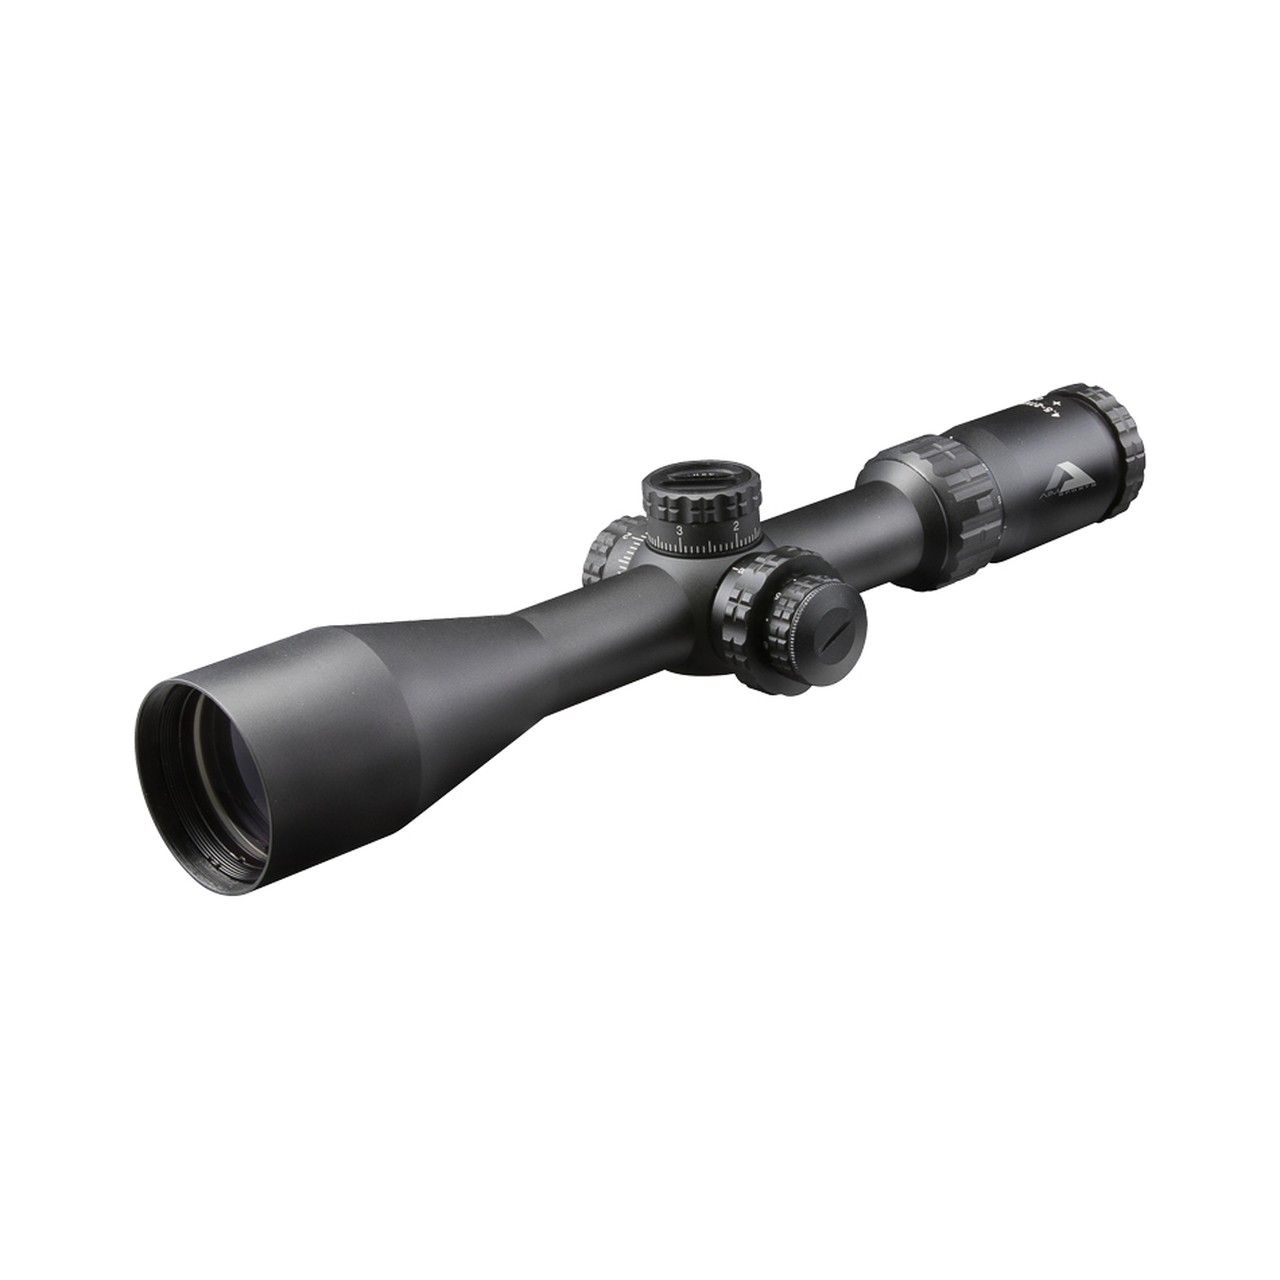 aim-sports-alpha-6-4-5-27x50-30mm-riflescope-with-mr1-mrad-reticle-1.jpg.optimal.jpg